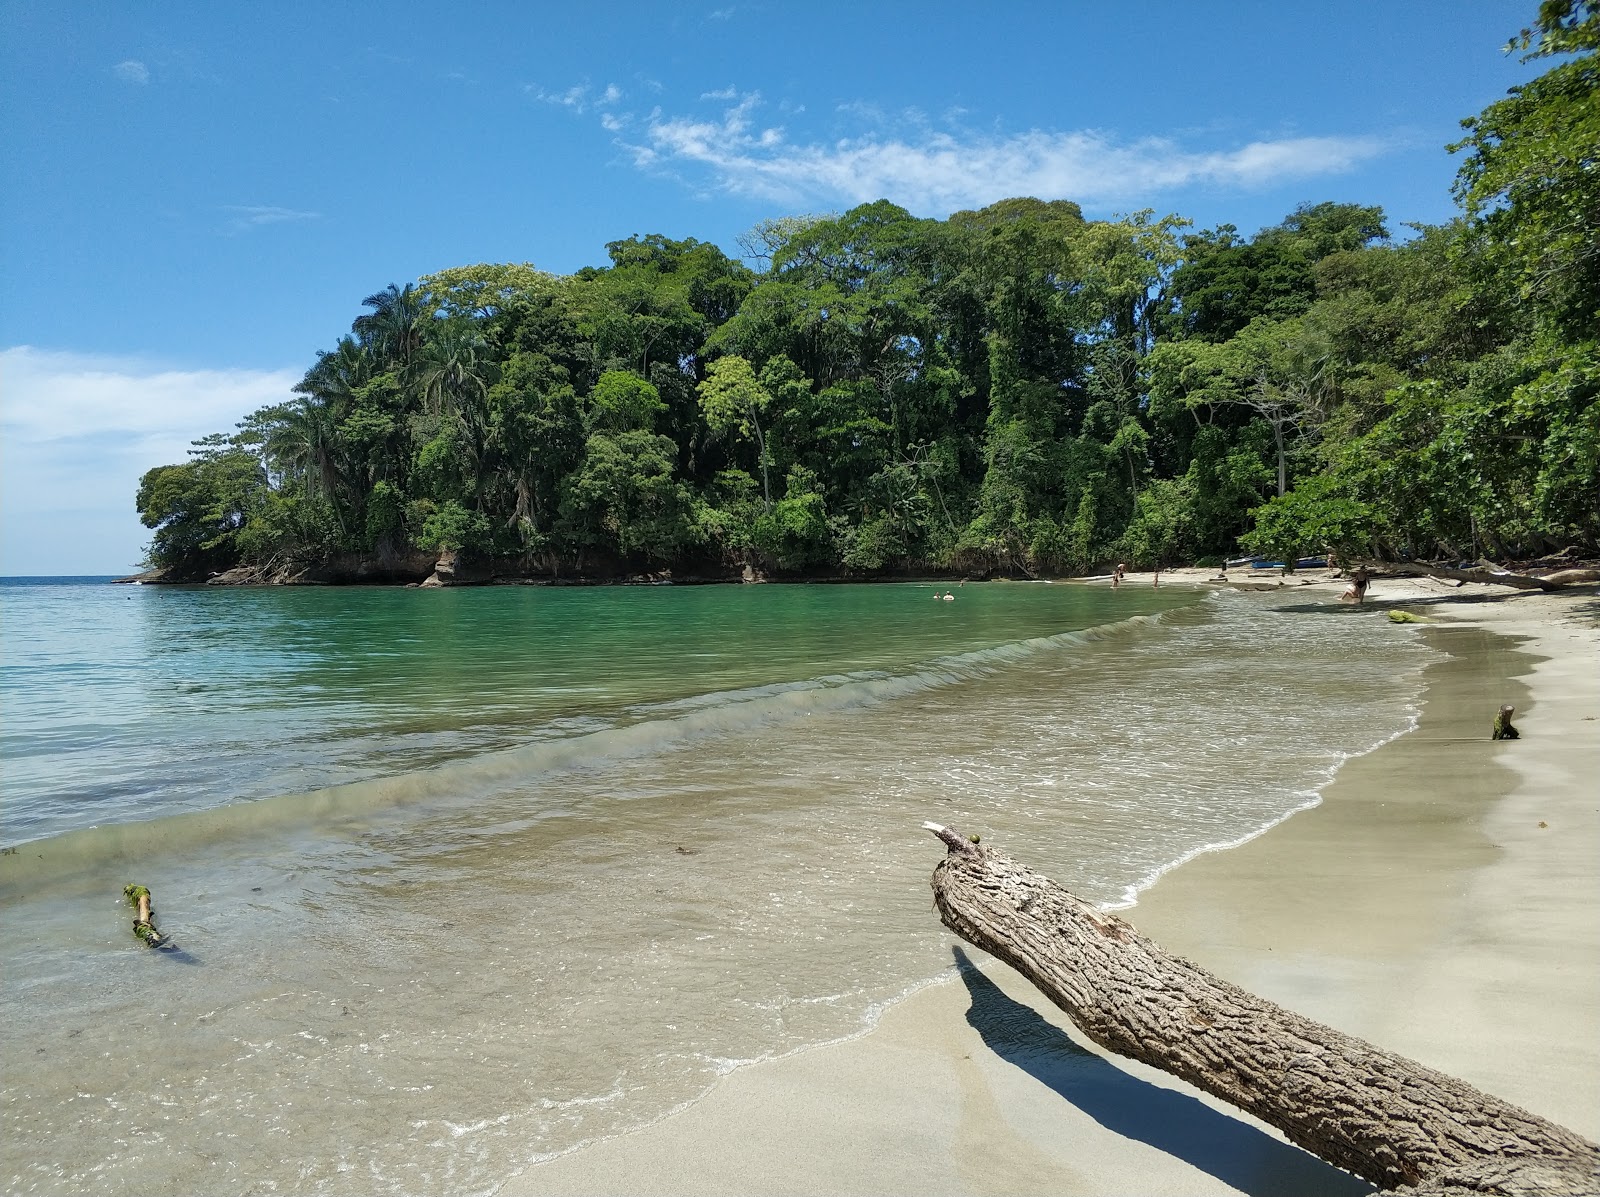 Foto de Praia Punta Uva II - lugar popular entre os apreciadores de relaxamento